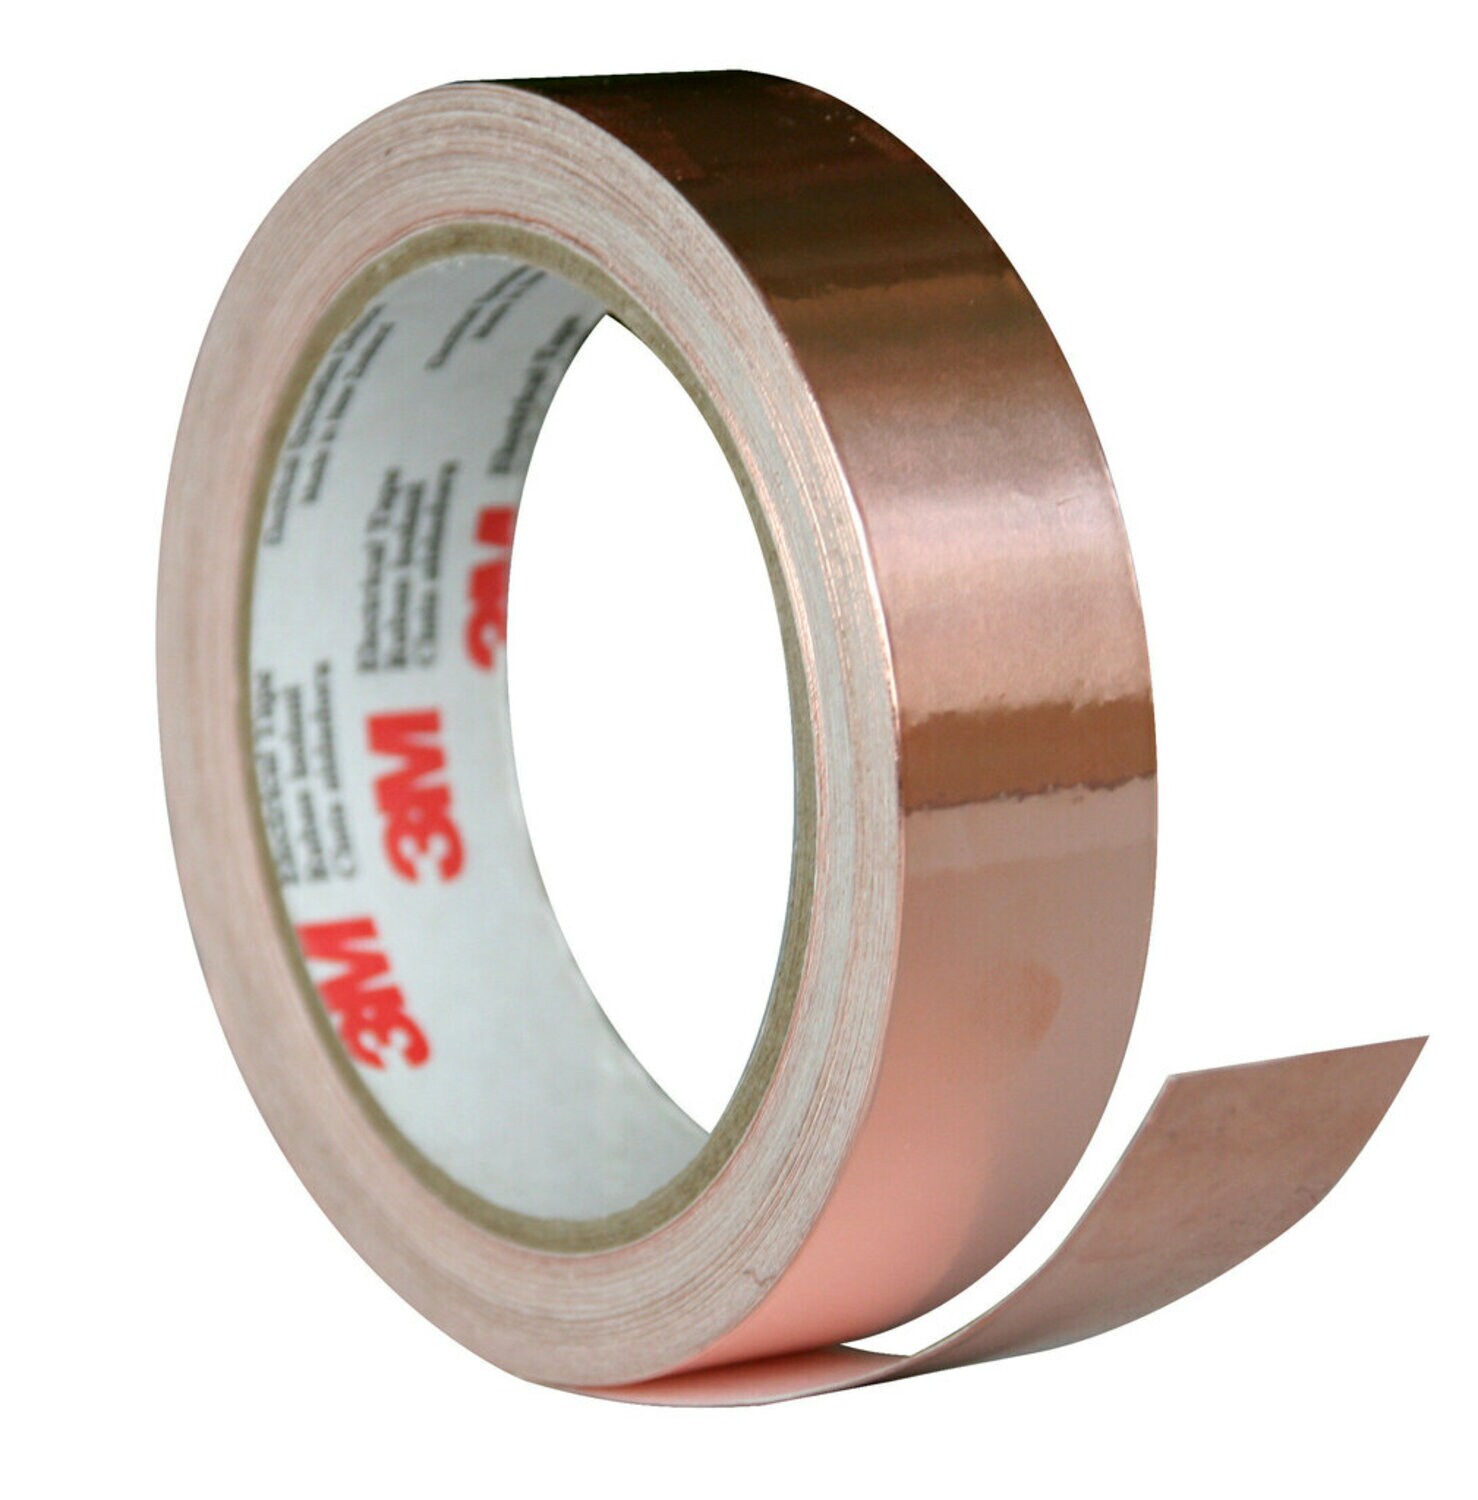 7010319338 - 3M Copper Foil Shielding Tape 1181, 1 1/4 in X 60 yds, Mini-case, 3-in
paper core